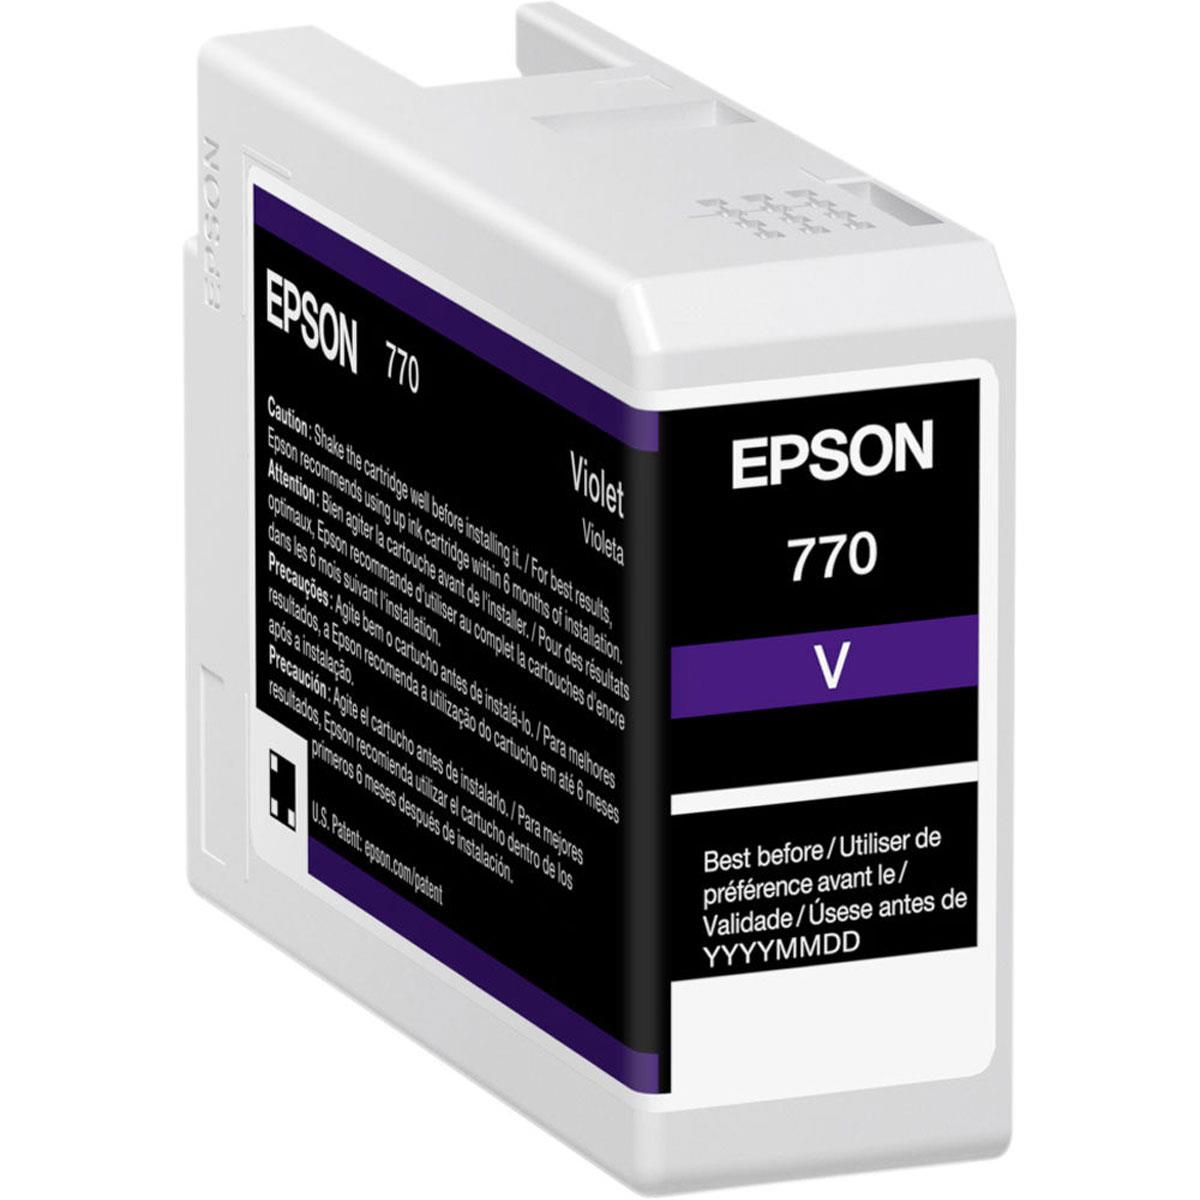 Epson 770 UltraChrome PRO10 Violet Ink